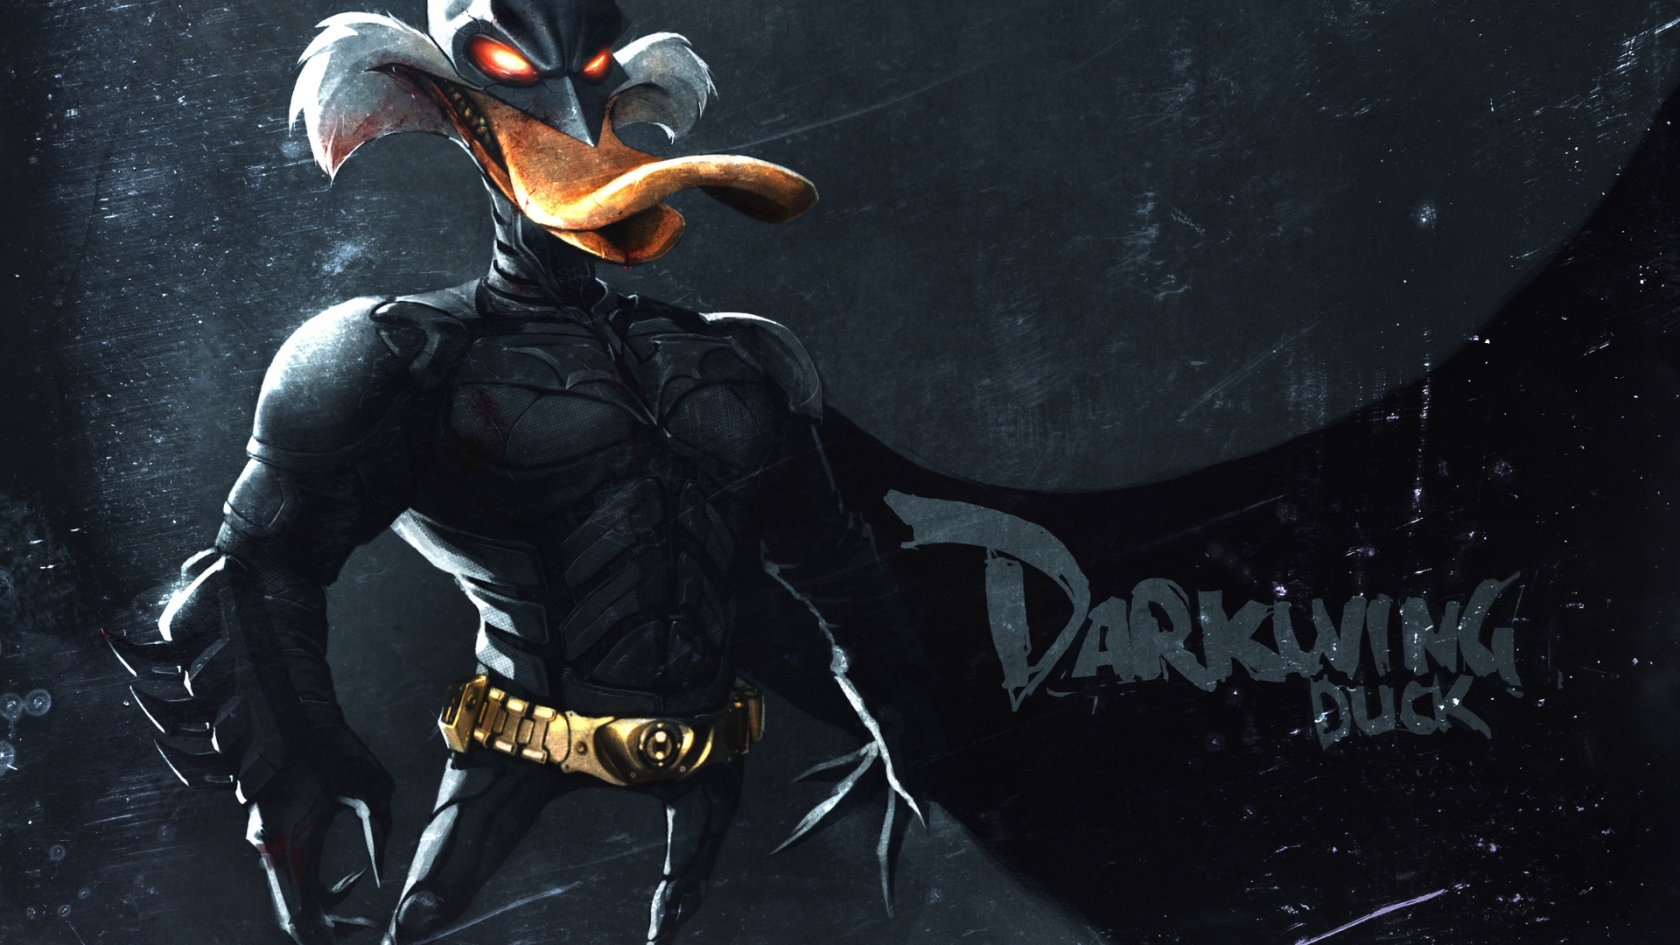 Darkwing Duck Mask for 1680 x 945 HDTV resolution